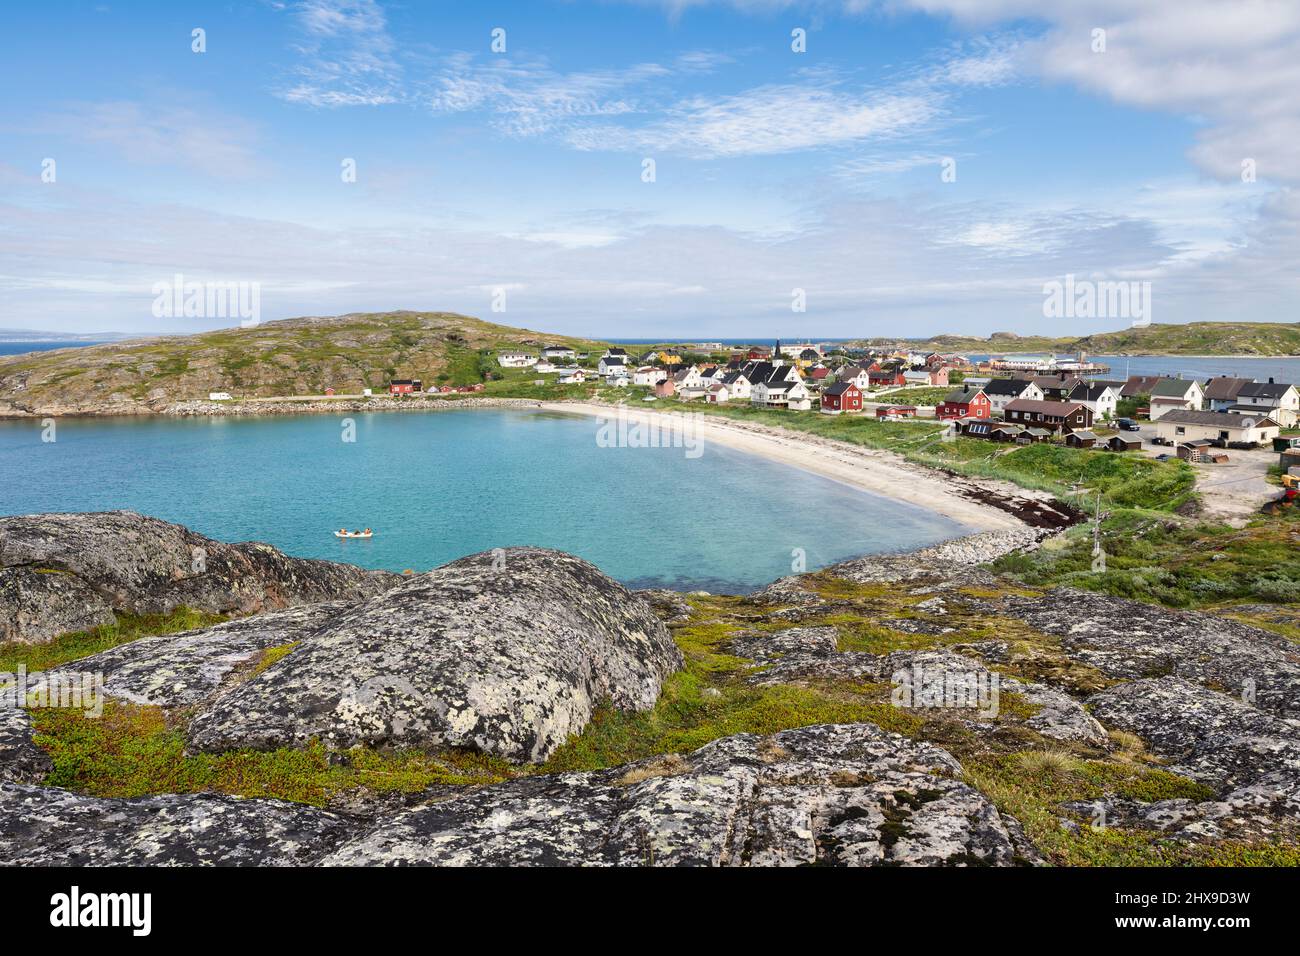 View of the fishing village Bugoynes (Pykeija), Varangerfjord, Norway Stock Photo